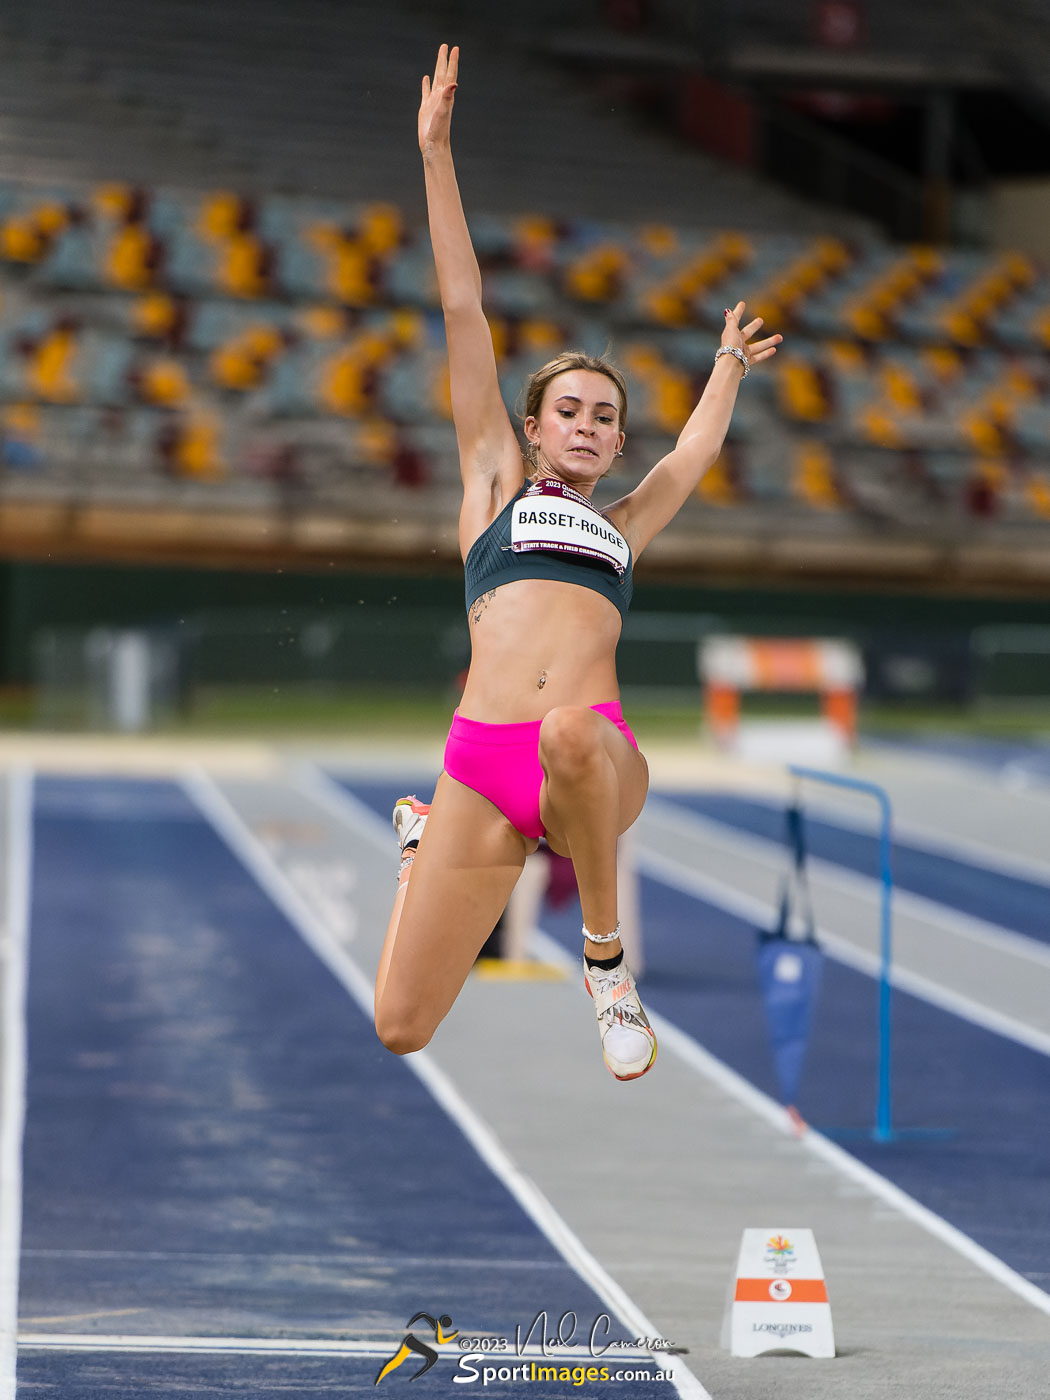 Lucie Basset-Rouge, Women Under 18 Long Jump